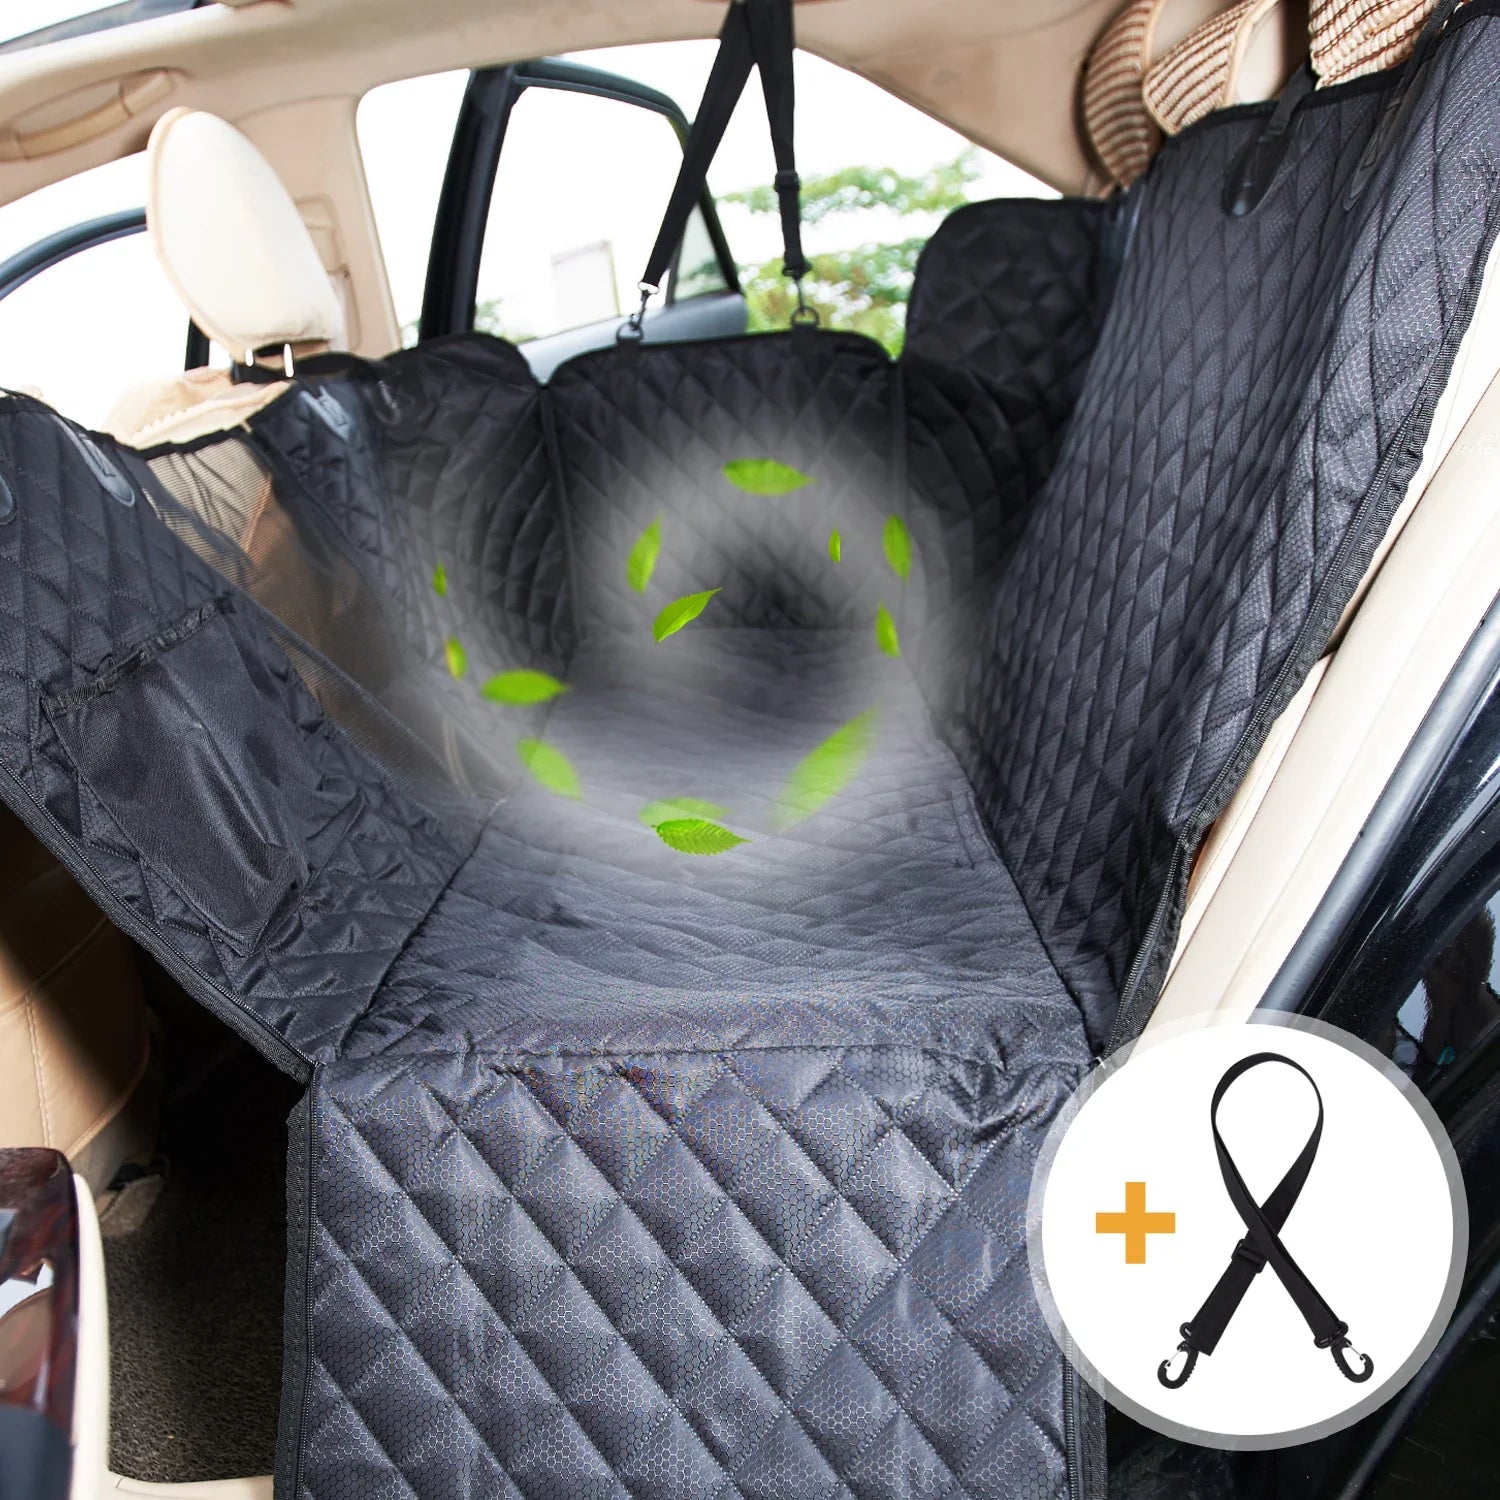 Pet Transport Hammock Cat Dog Car Seat Cover: Waterproof Backseat Protector & Front Seat Cover  ourlum.com   